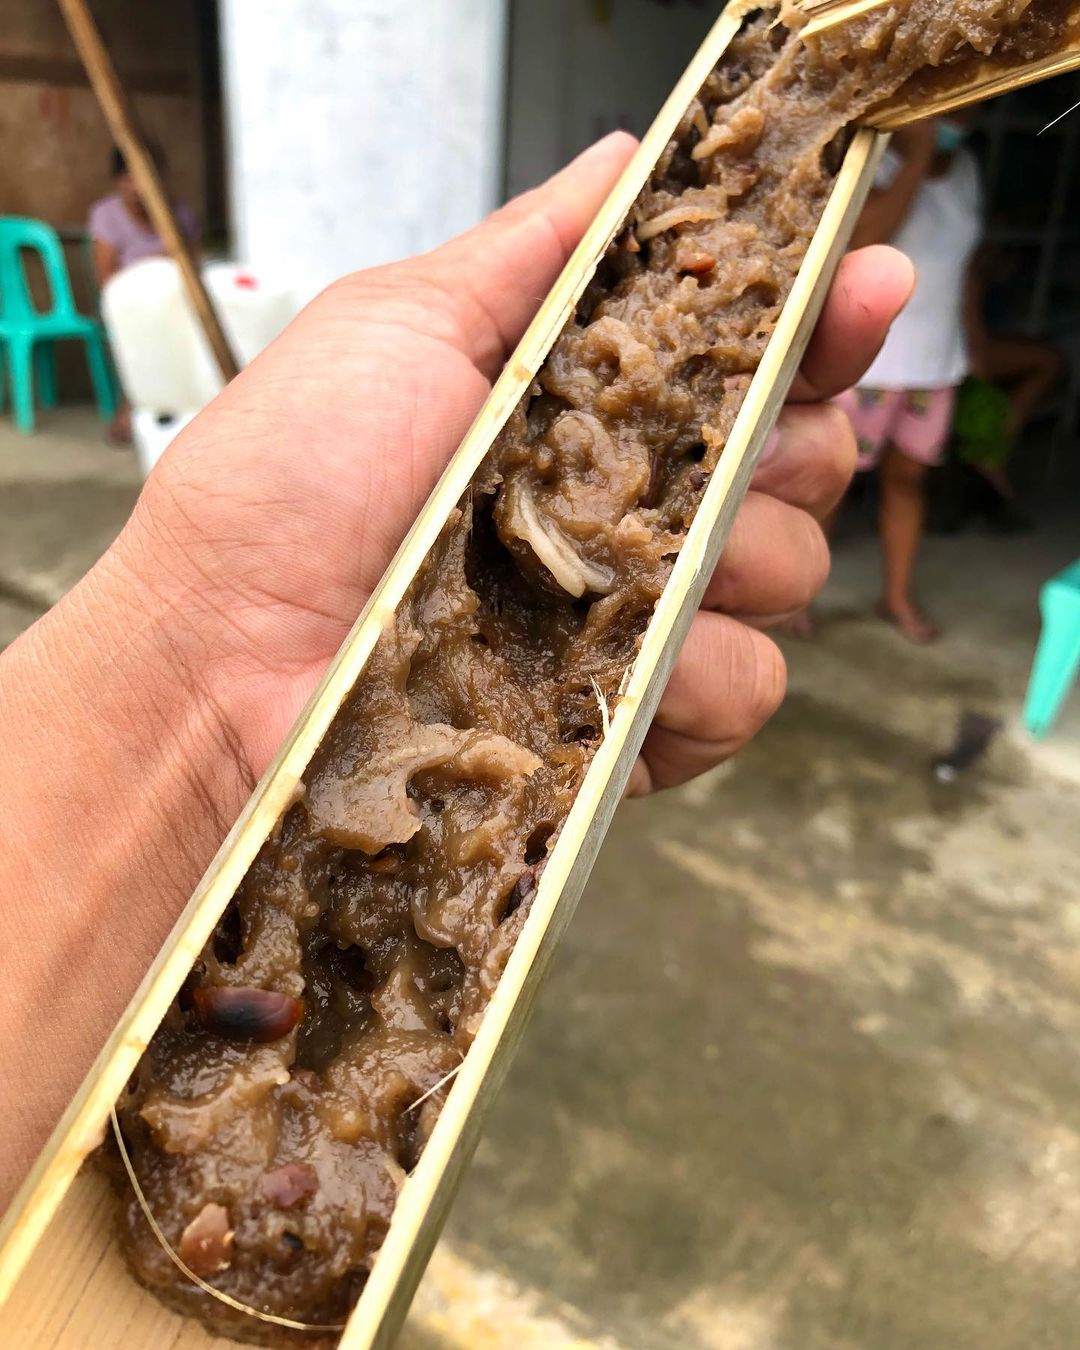 Ilocano foods - tinubong